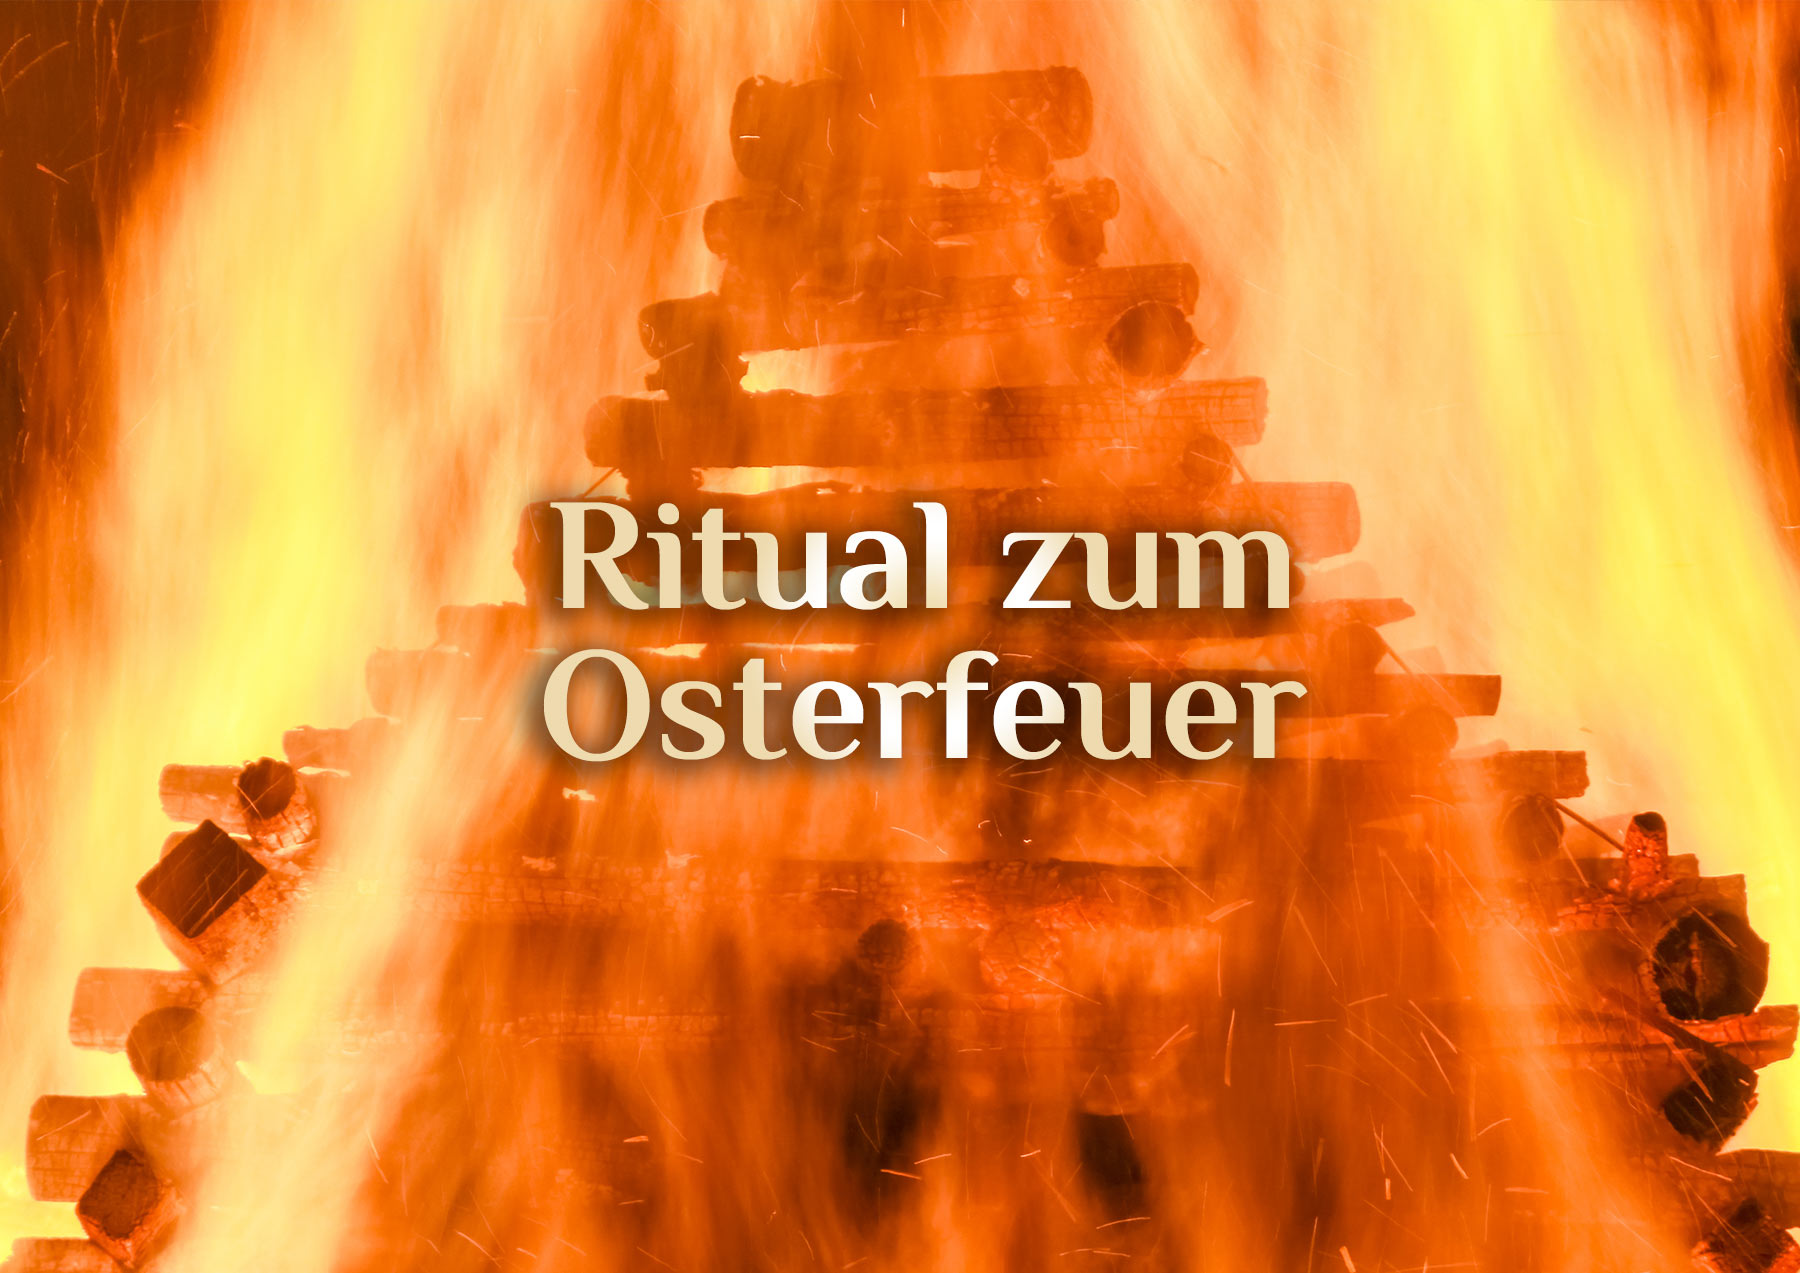 Osterfeuer Ritual 🔥 Feuerweihe  🔥 Jaudus Ritual